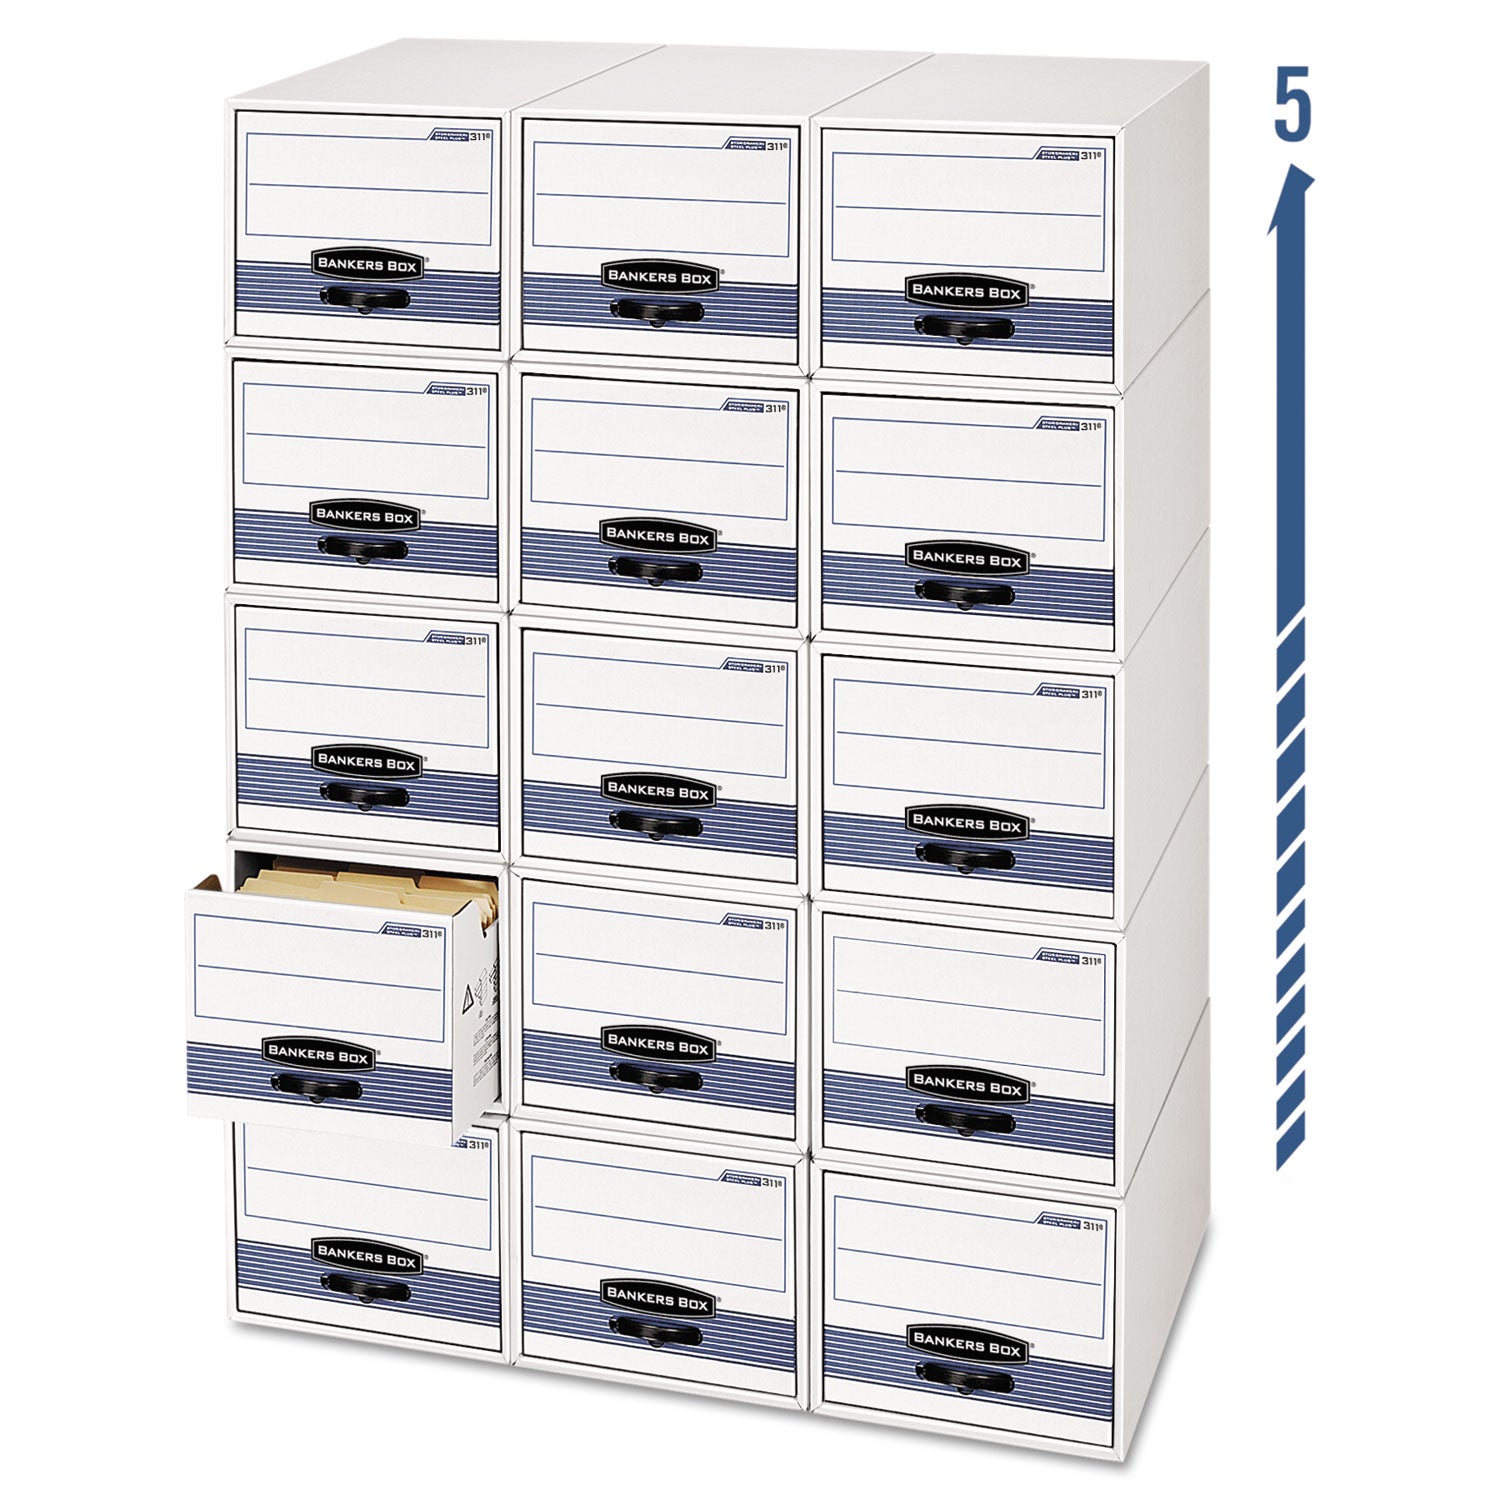 STOR/DRAWER STEEL PLUS Extra Space-Savings Storage Drawers, Letter Files, 10.5" x 25.25" x 6.5", White/Blue, 12/Carton - 